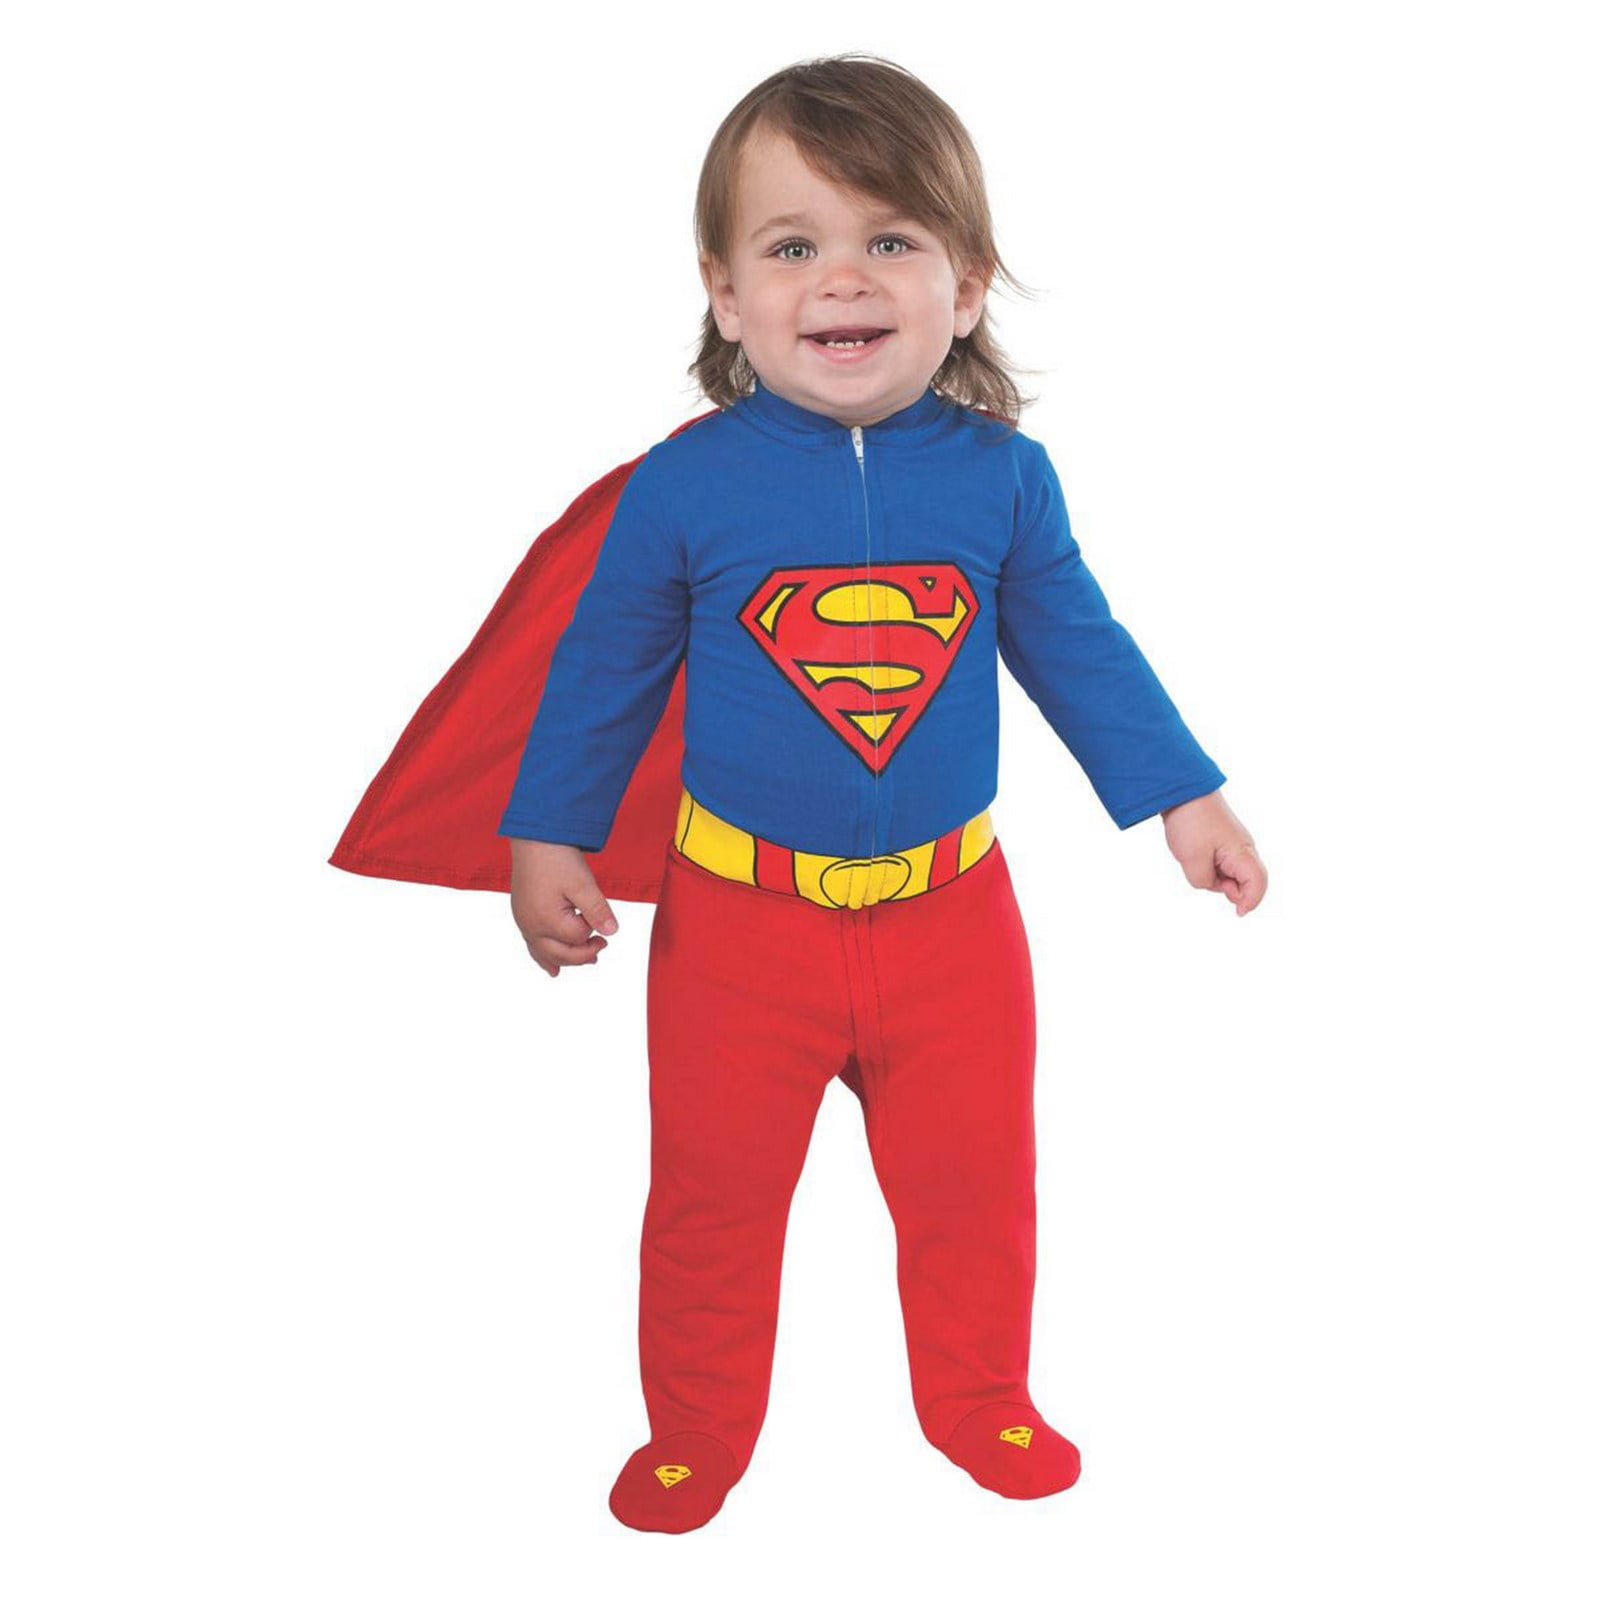 Superman Romper Costume With Removable Cape 